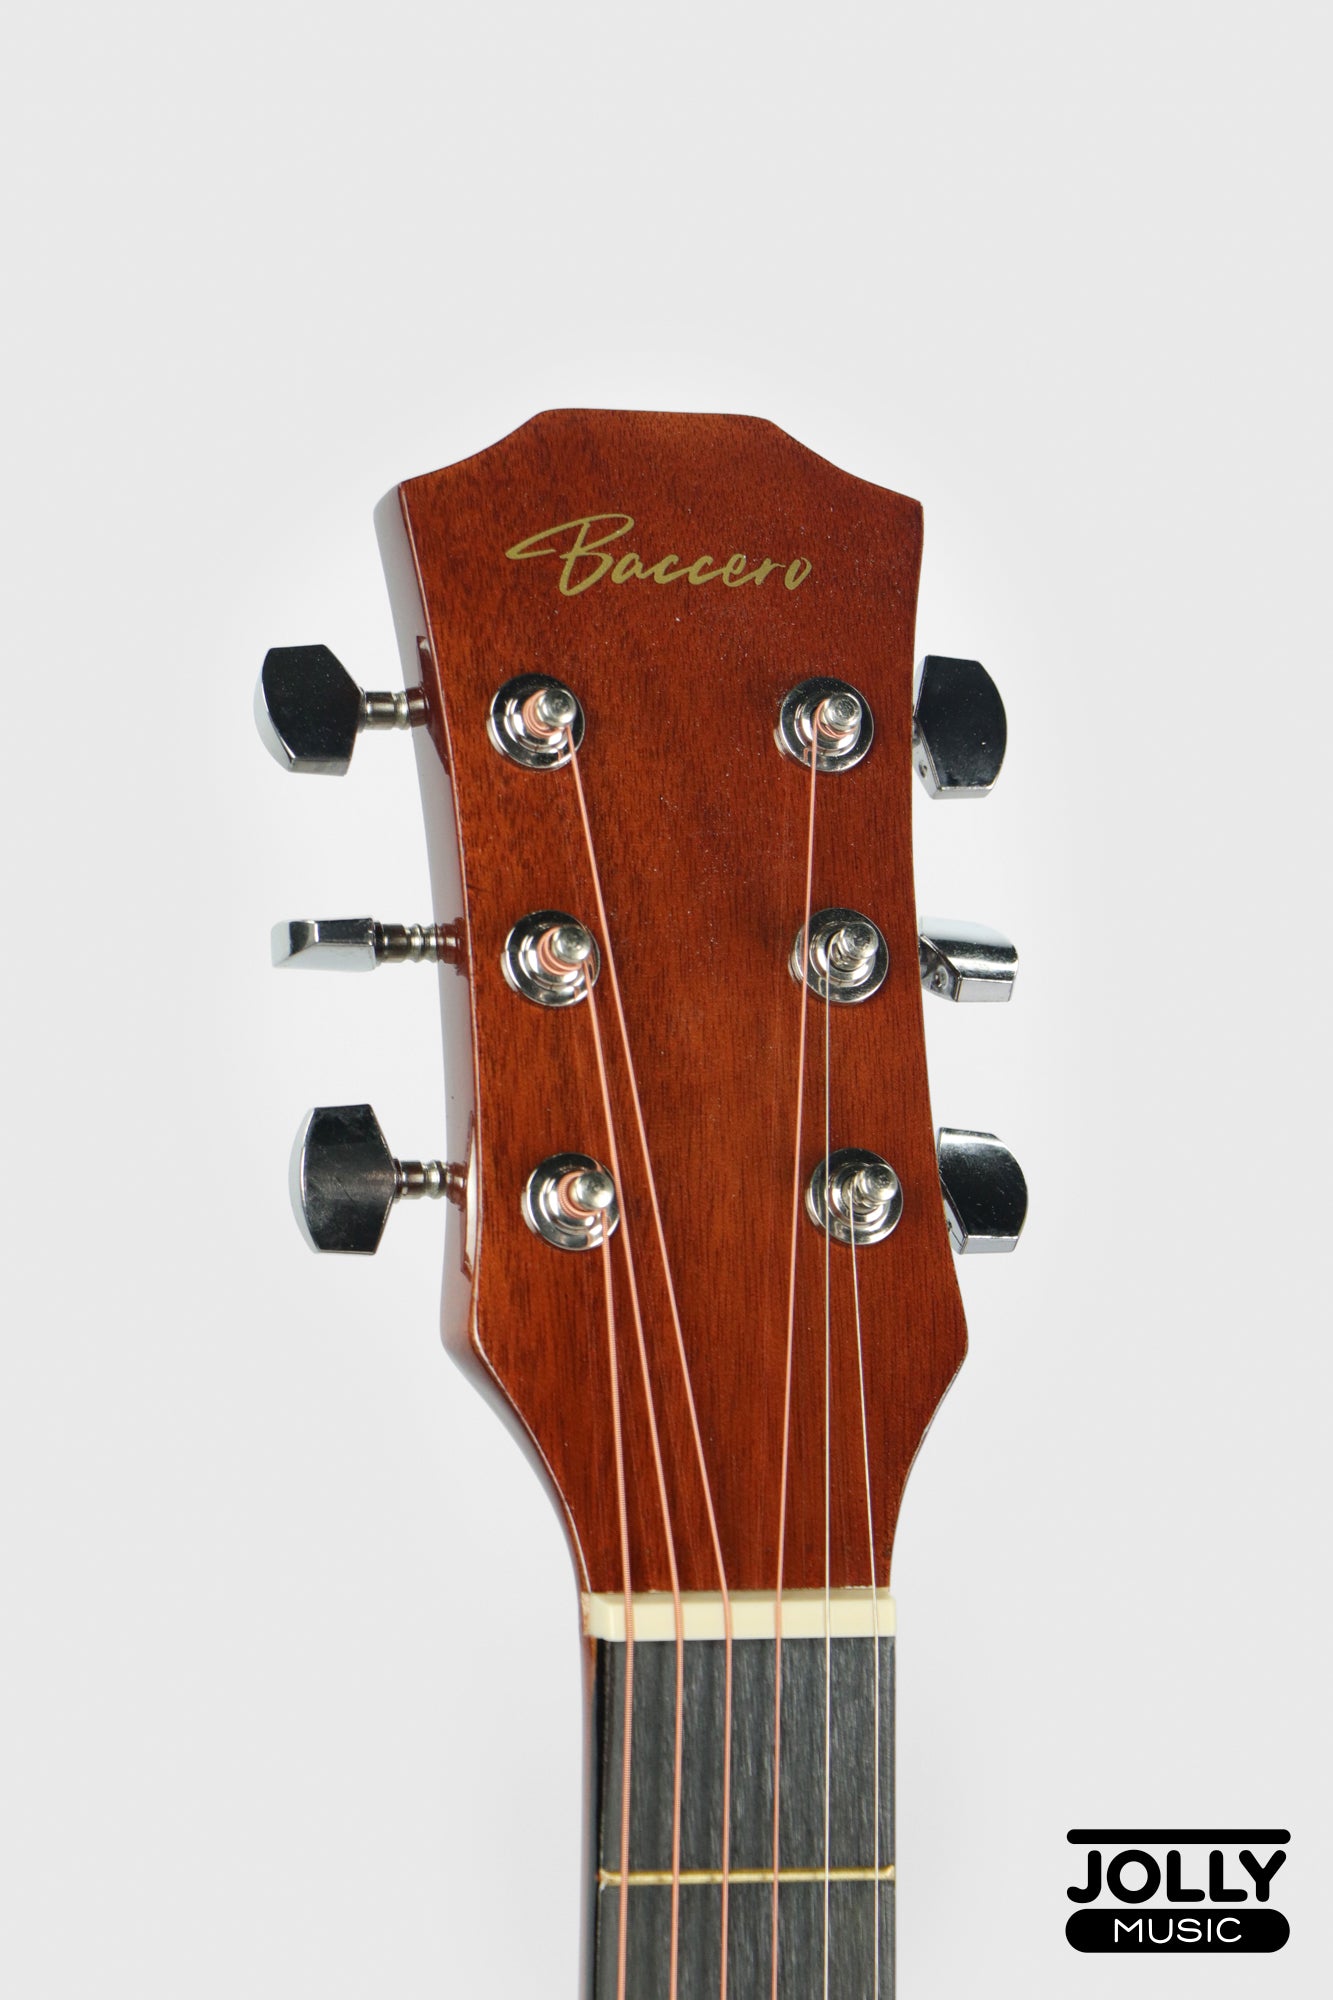 Baccero 38" Guitar K-38LT Truss Rod w/ Case, 3 Picks, Tuner, Capo - Brown